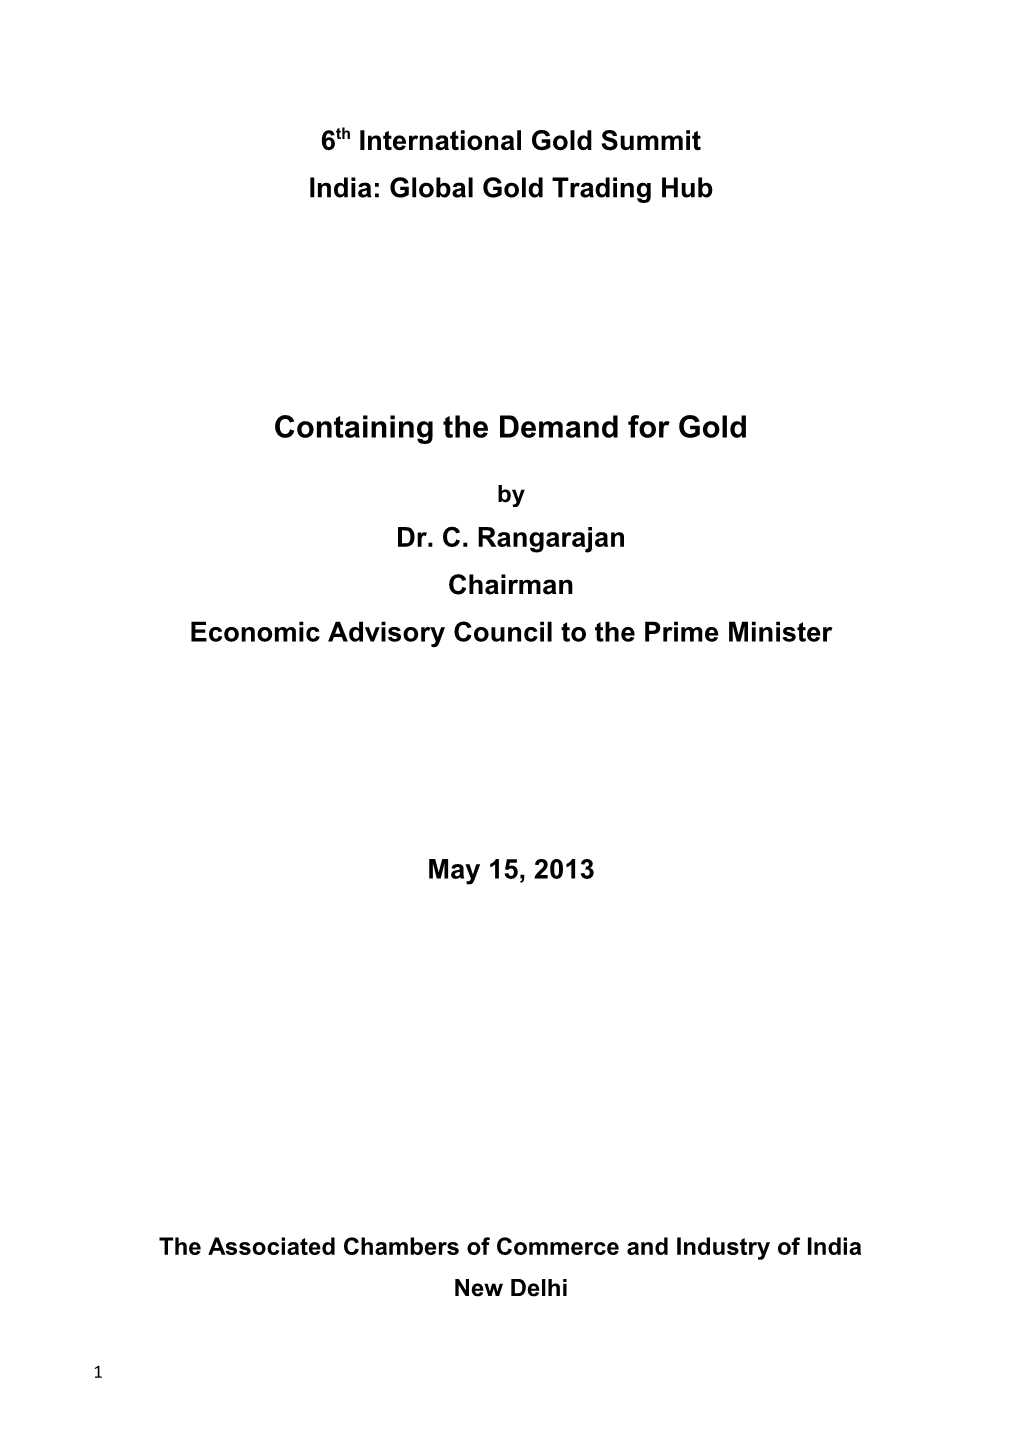 India: Global Gold Trading Hub